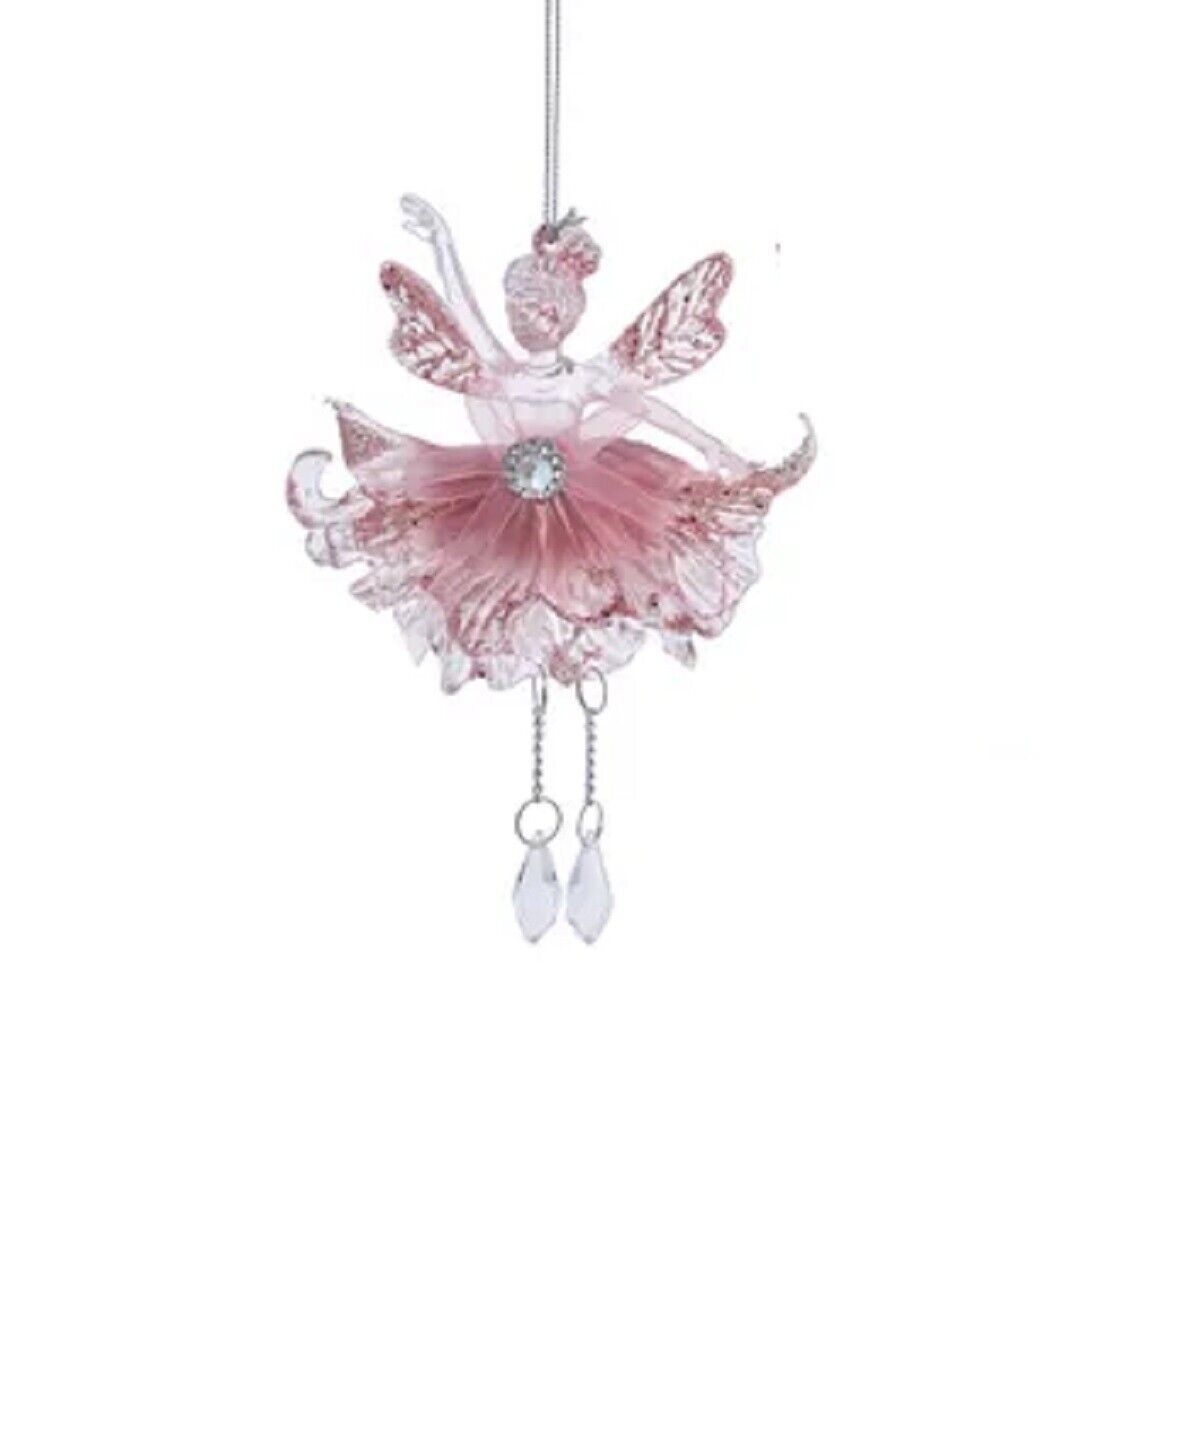 Kurt Adler Christmas Christmas Ornament Pink Dangle Legs Fairy With Bow Style A